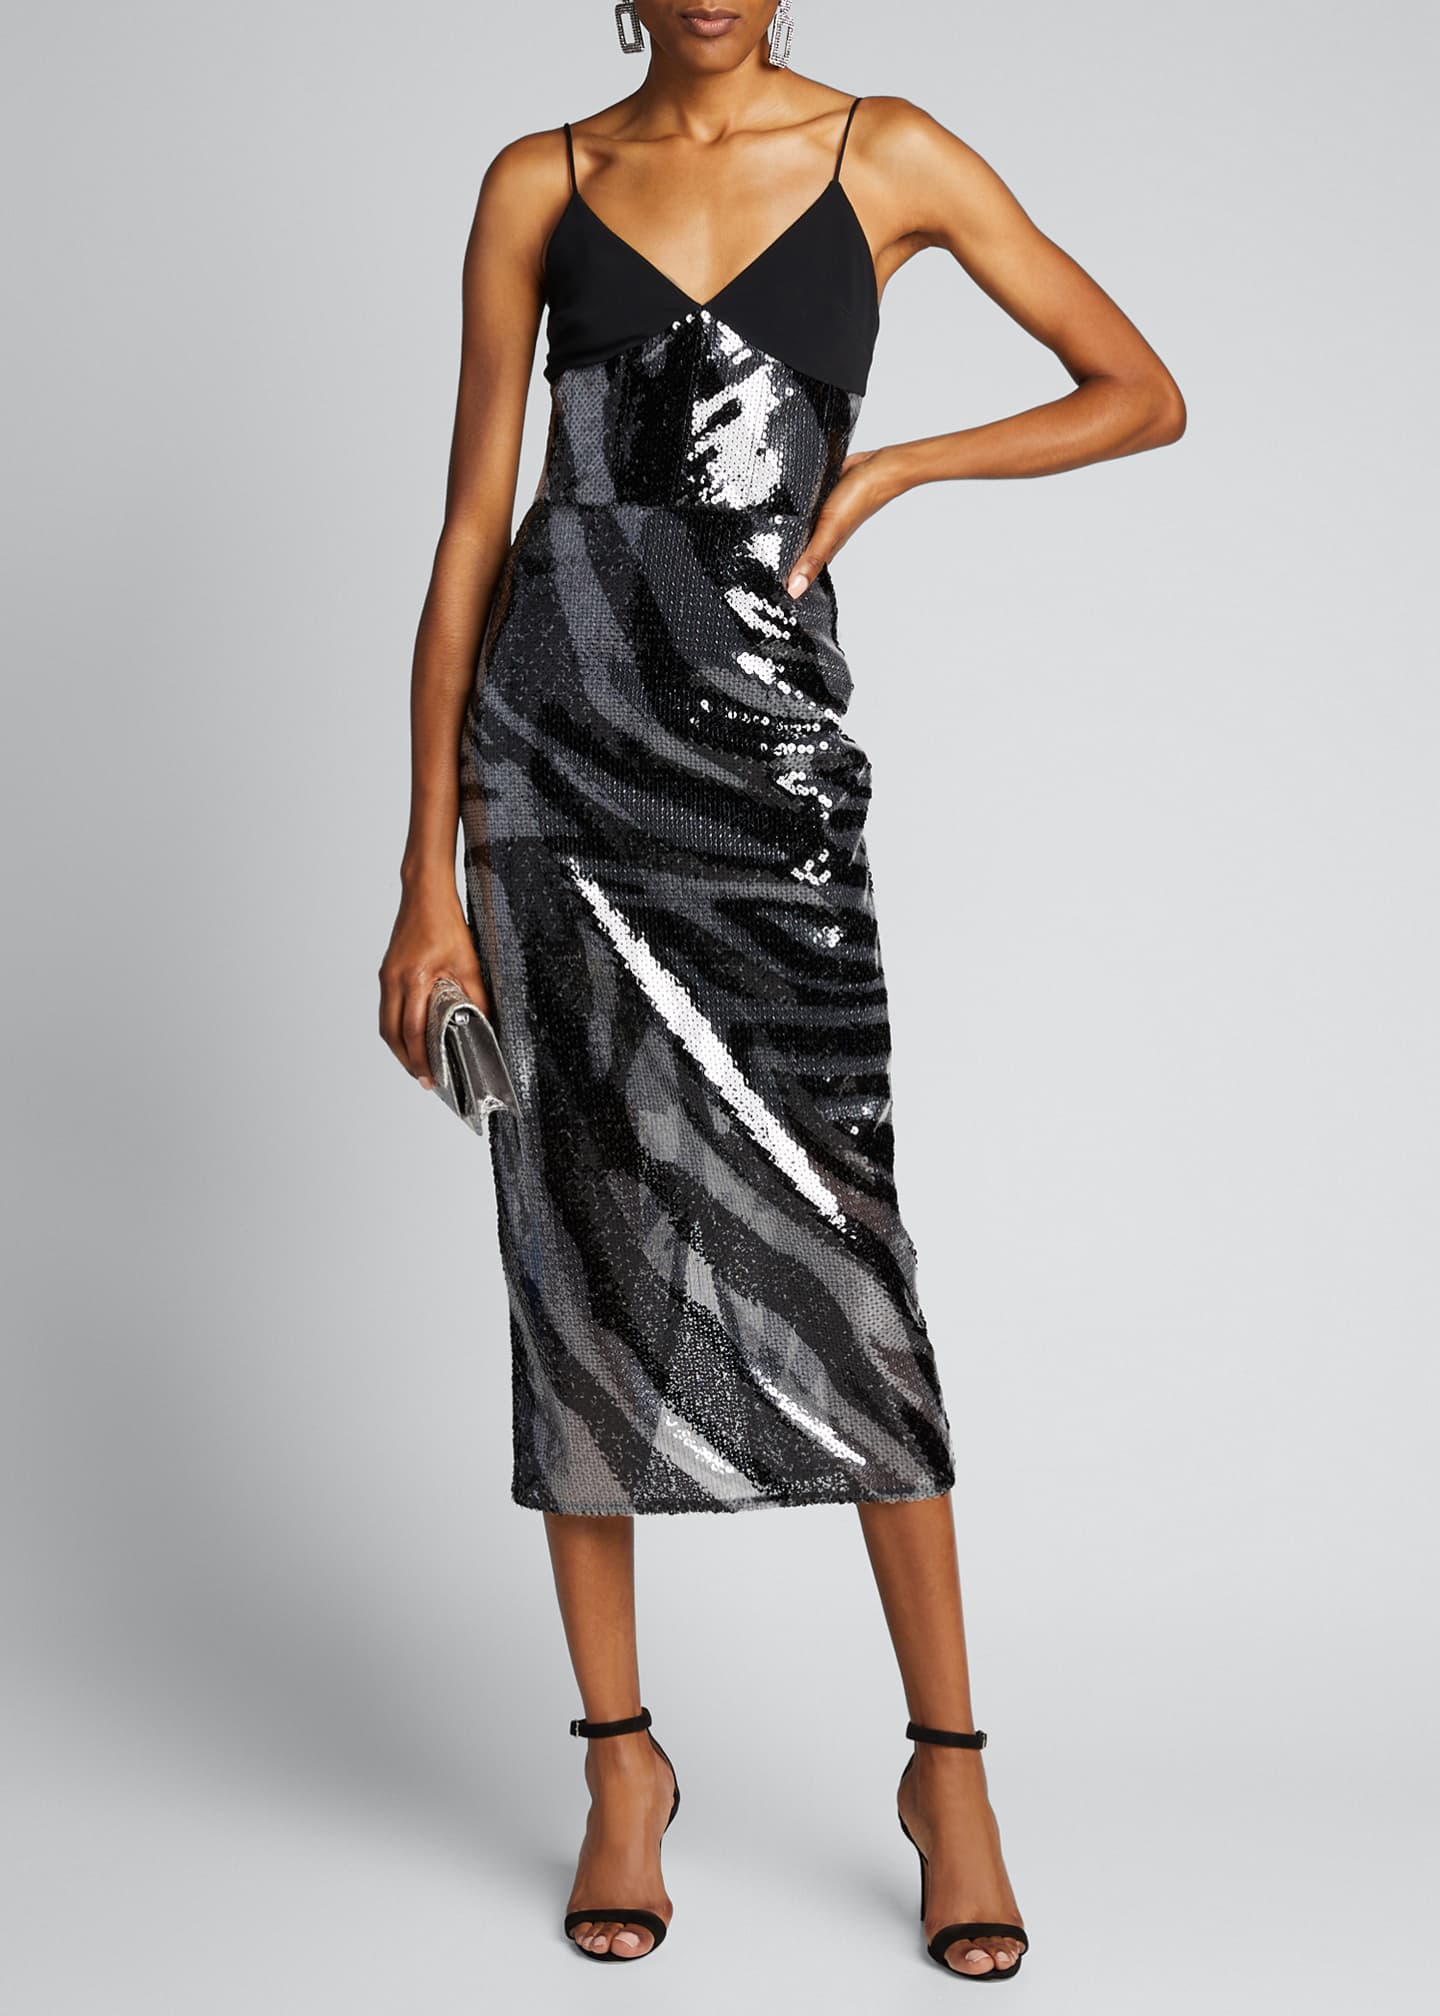 David Koma Zebra-Print Sequined Cami Dress - Bergdorf Goodman